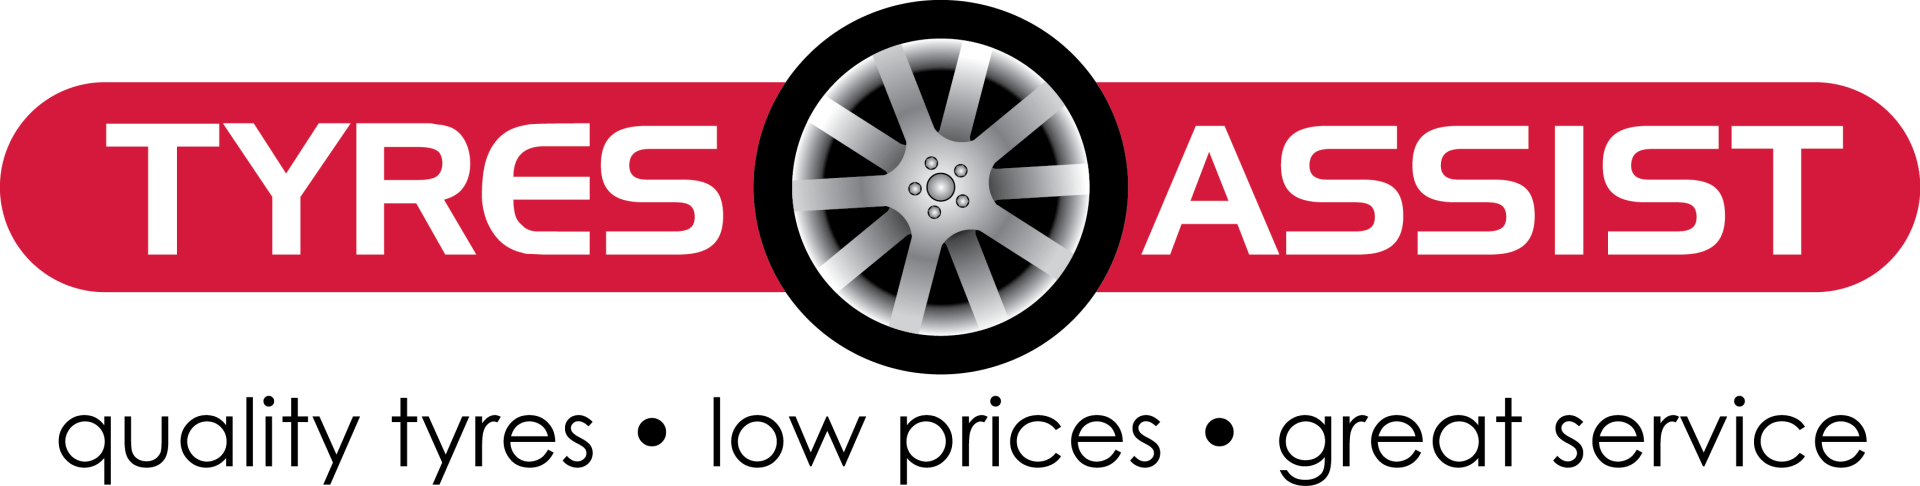 Tyres Assist Ltd logo